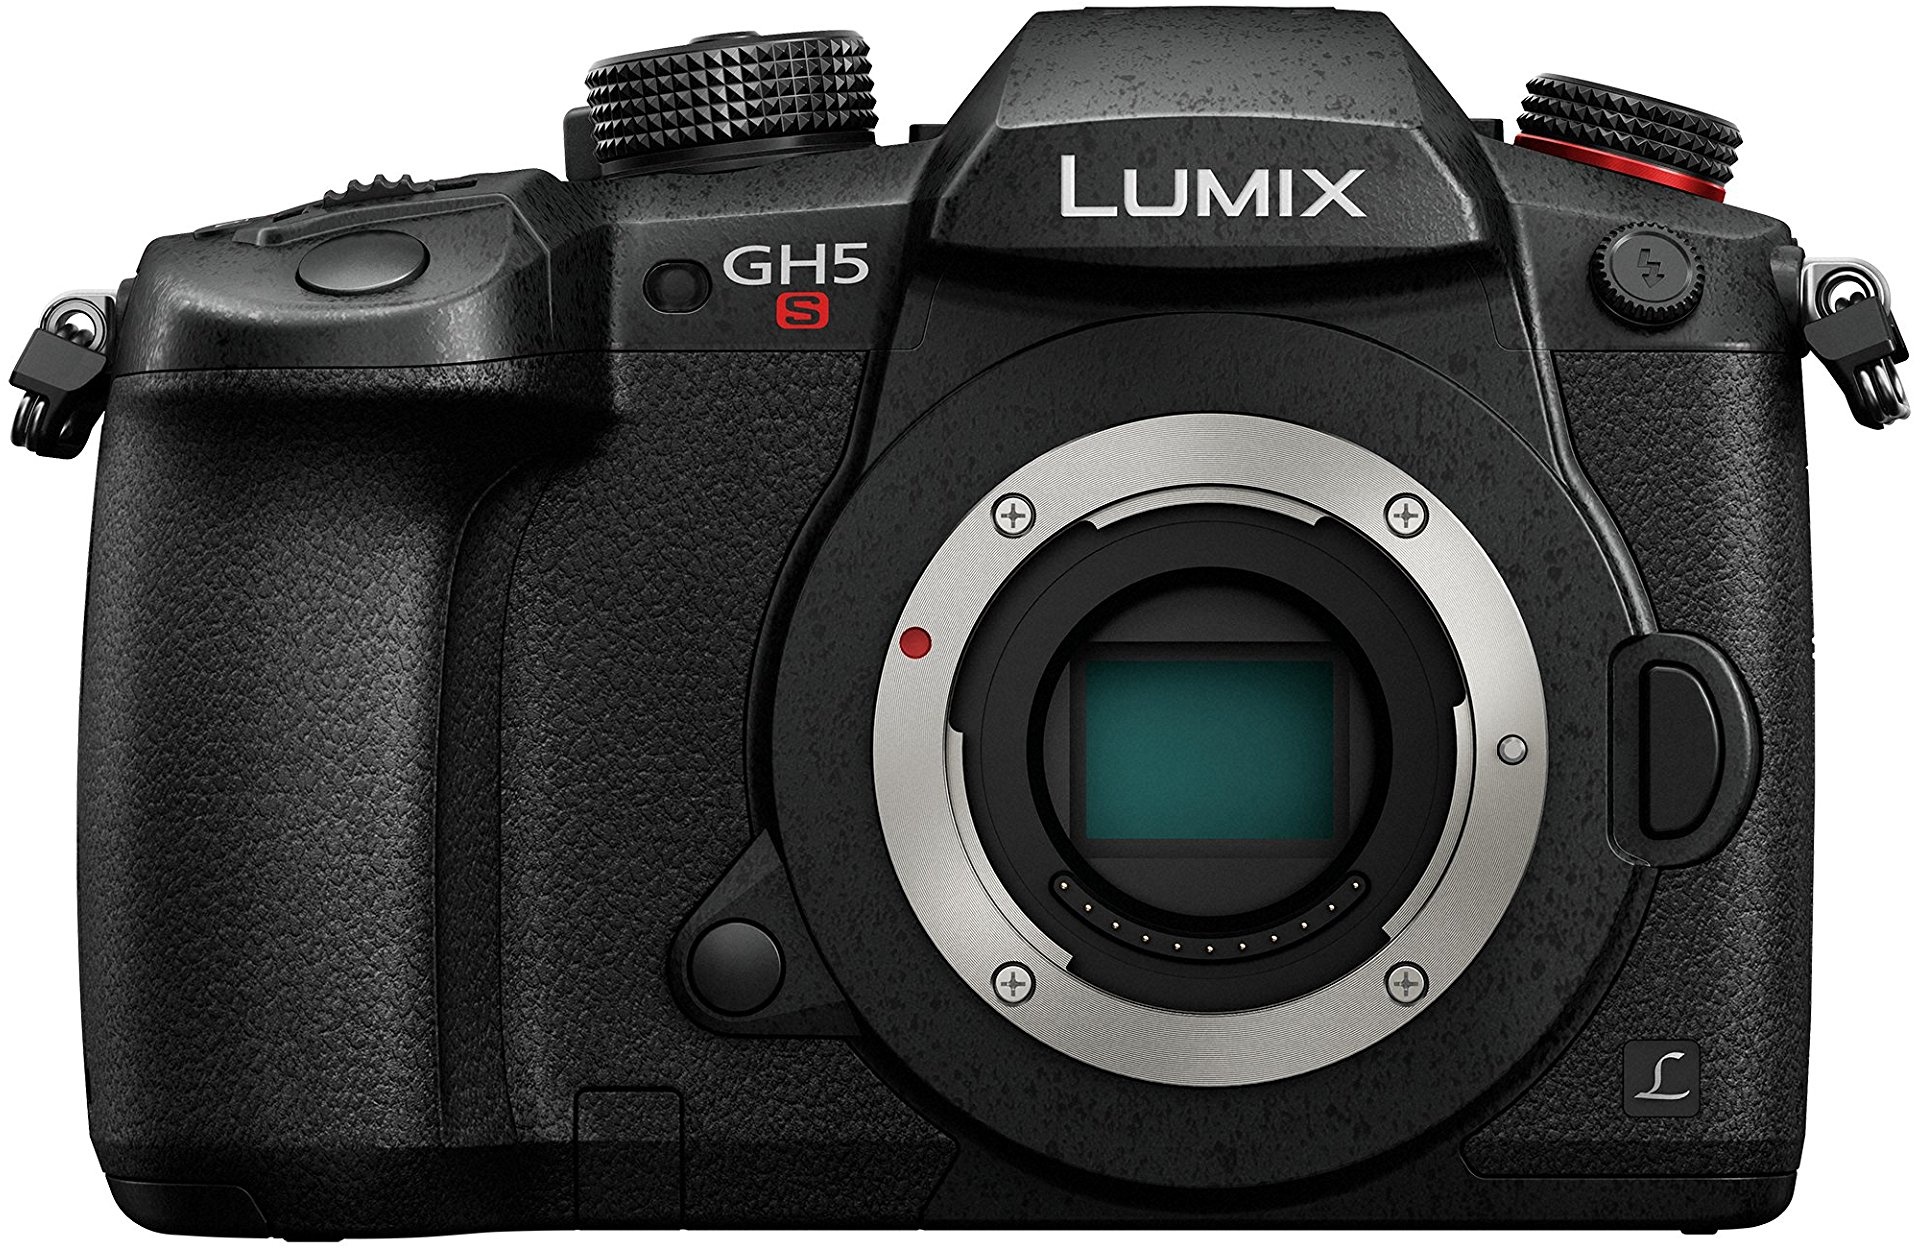 Panasonic Lumix DC-GH5SEG-K Systemkamera (10 MP, prof. Videofunktionen, wetterfestes Magnesiumgehäuse, schwarz)